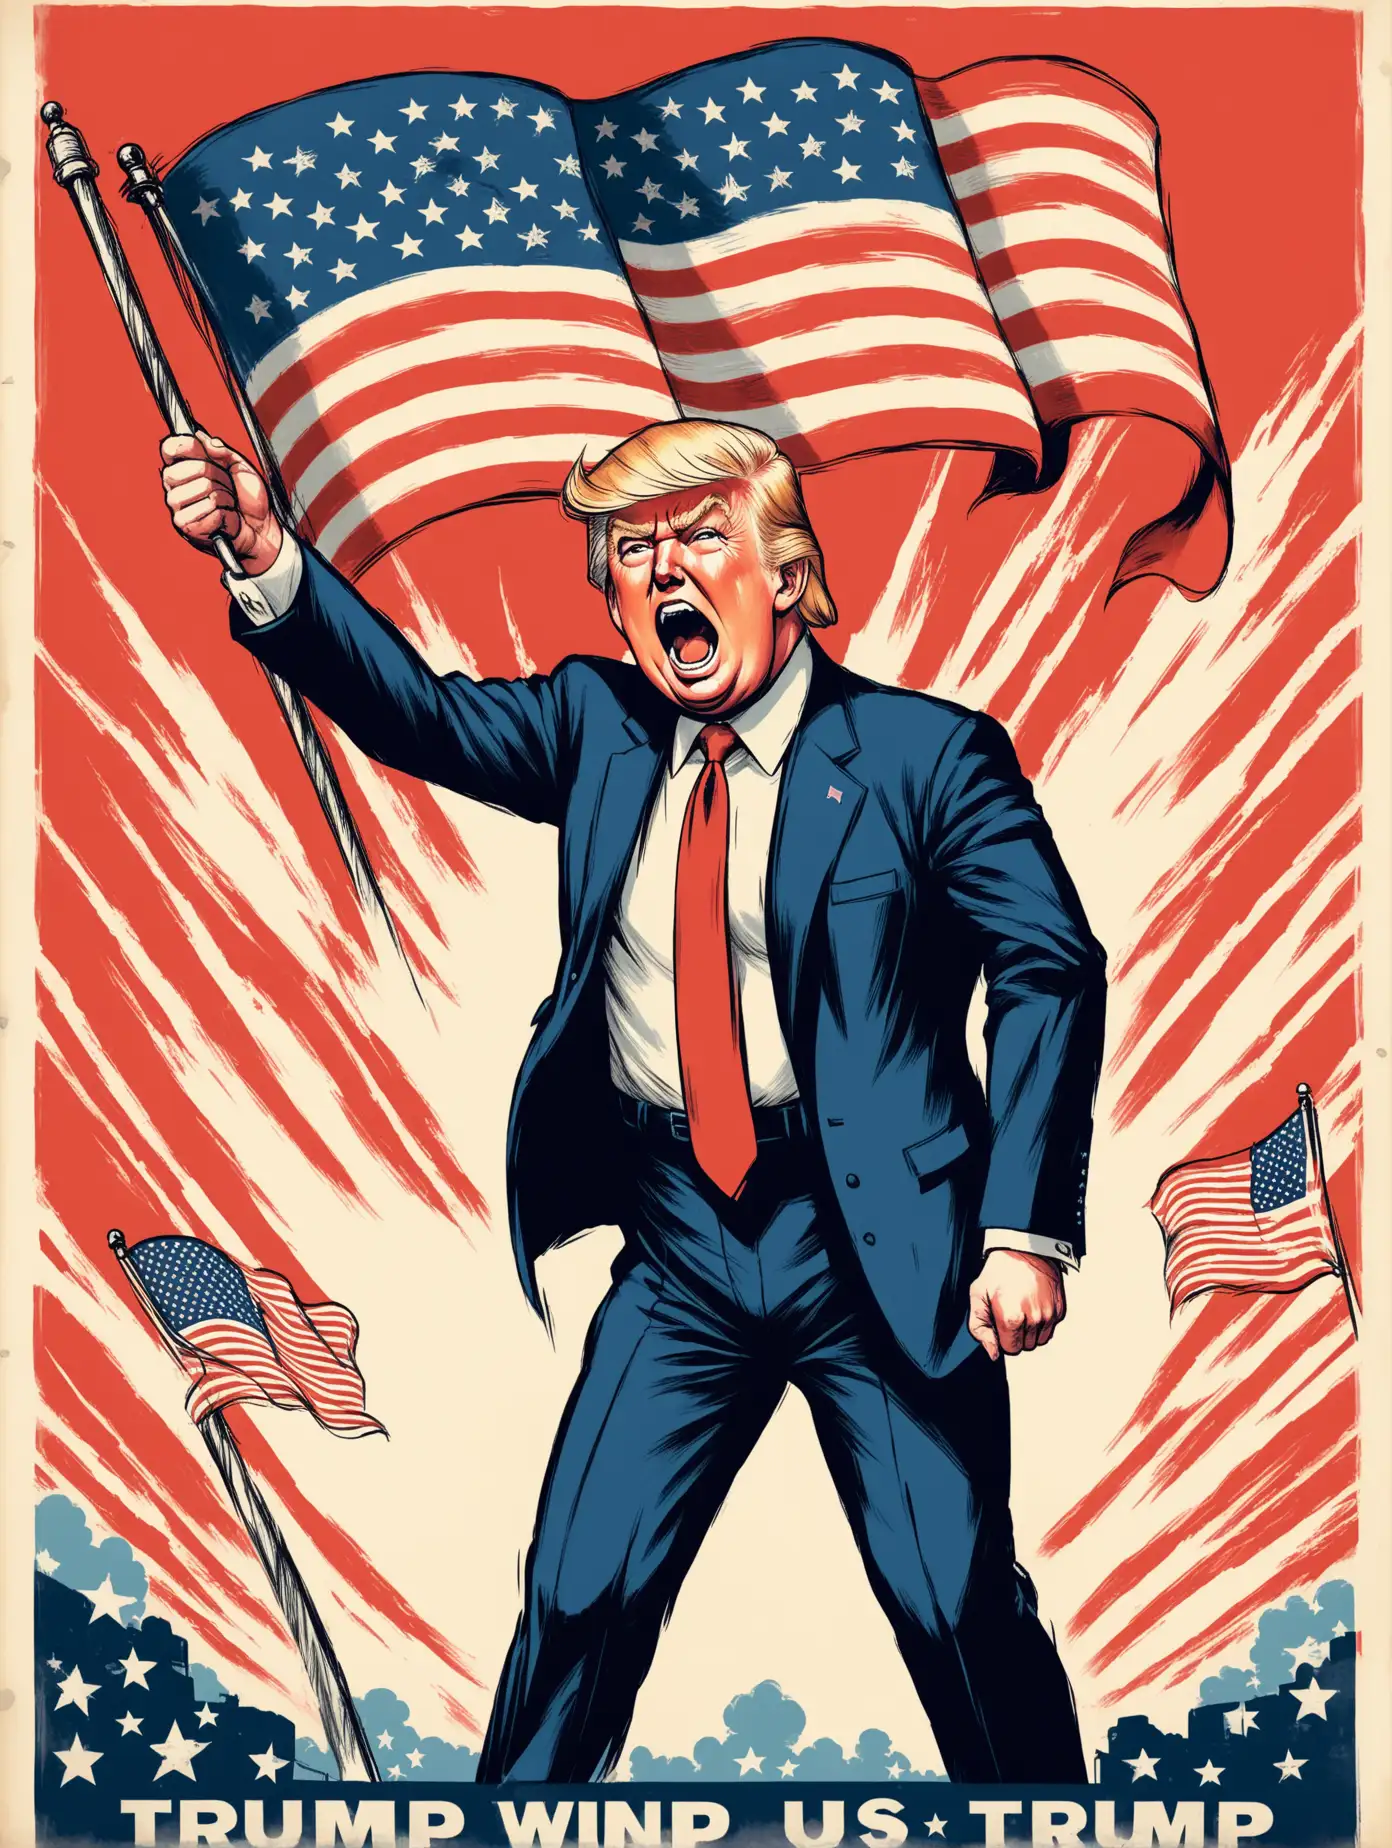 Patriotic Trump Vintage Poster President Trump Waving with US Flag in the Wind